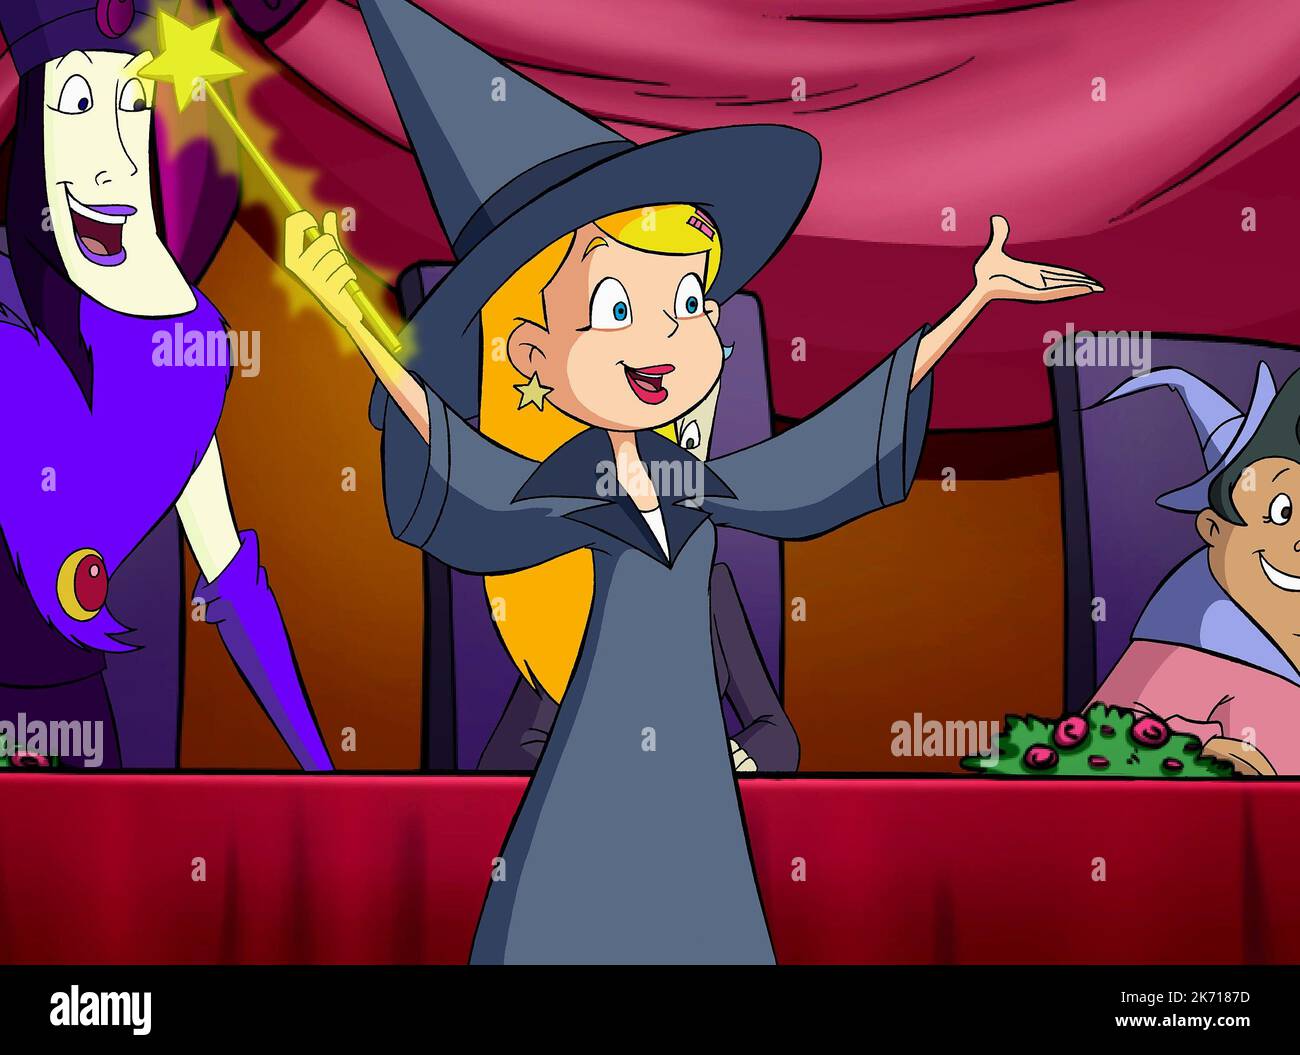 sabrina the teenage witch cartoon movie